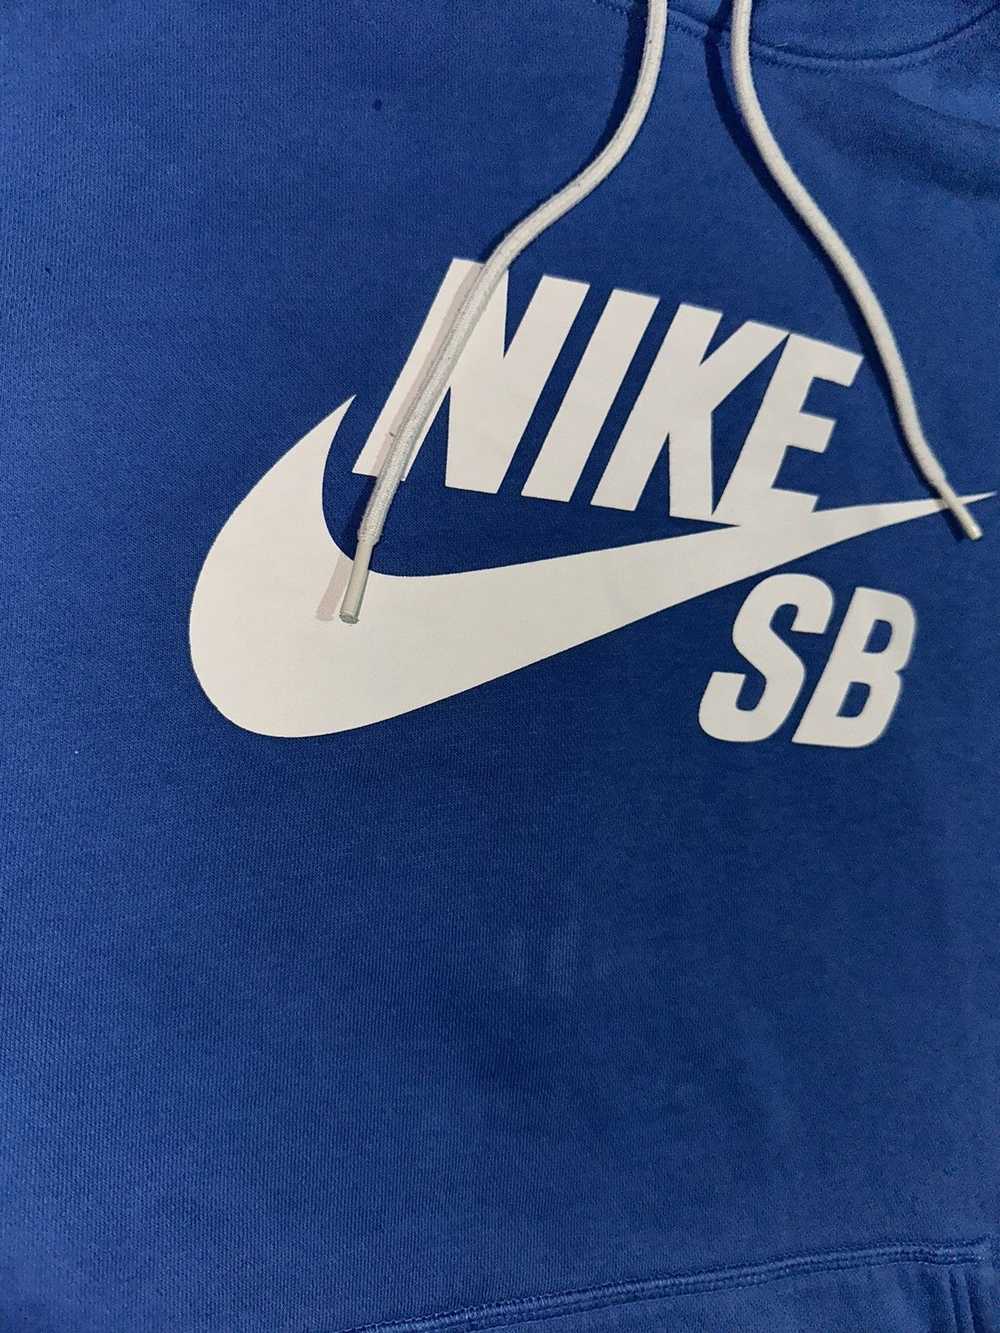 Nike Nike SB hoodie - image 4